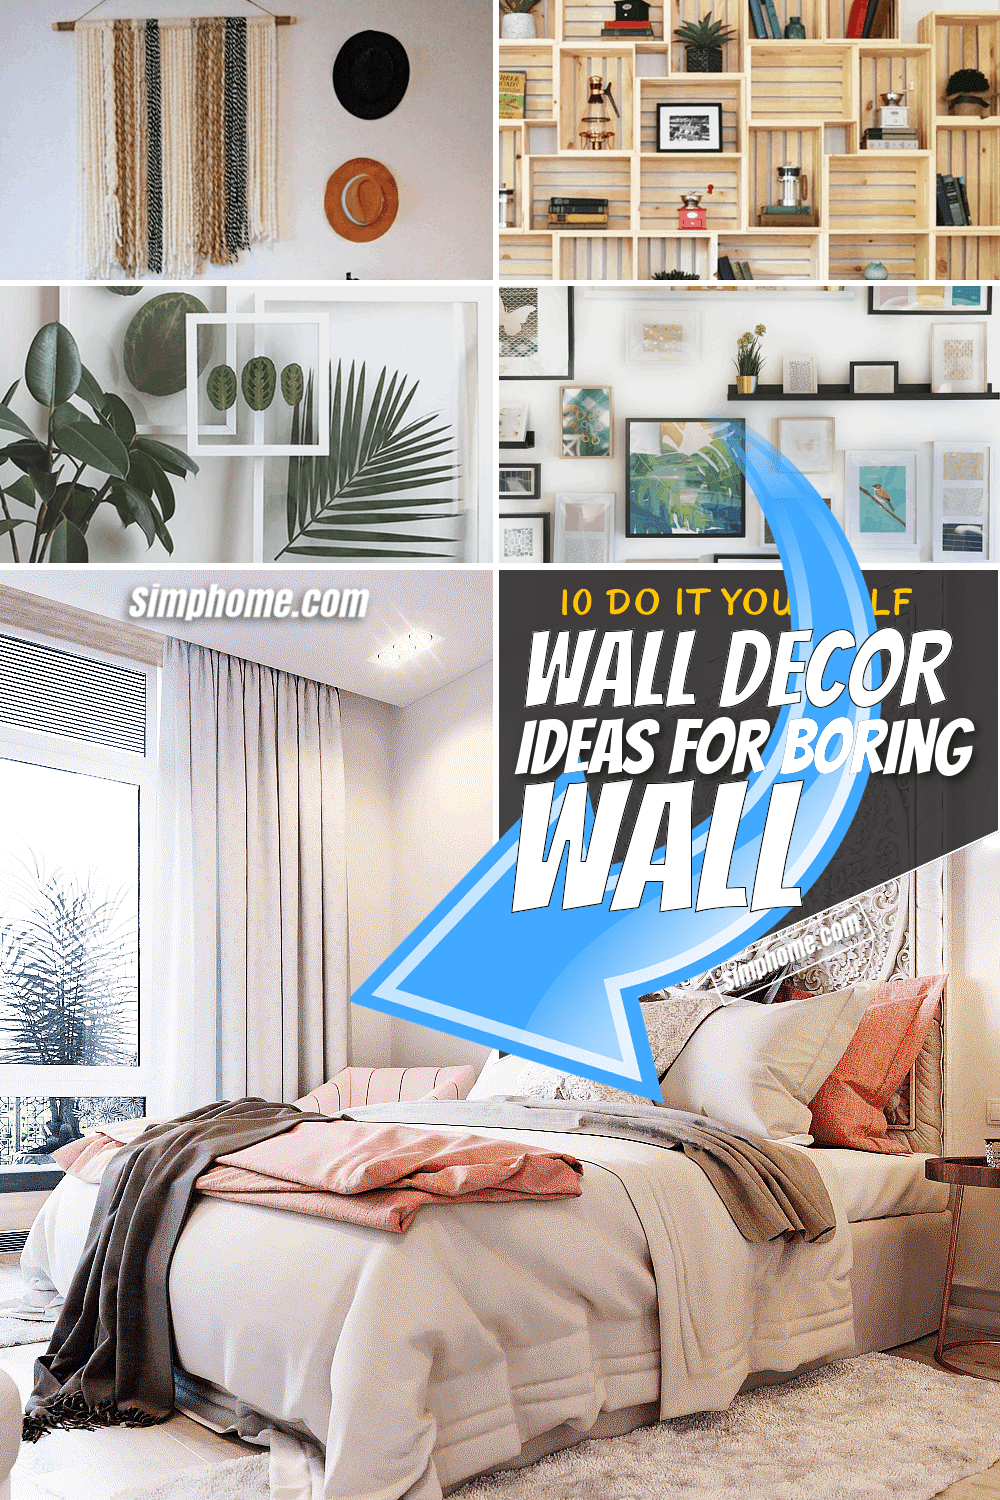 10 Wall Decor Ideas for Boring Walls via SIMPHOME.COM Featured Pinterest